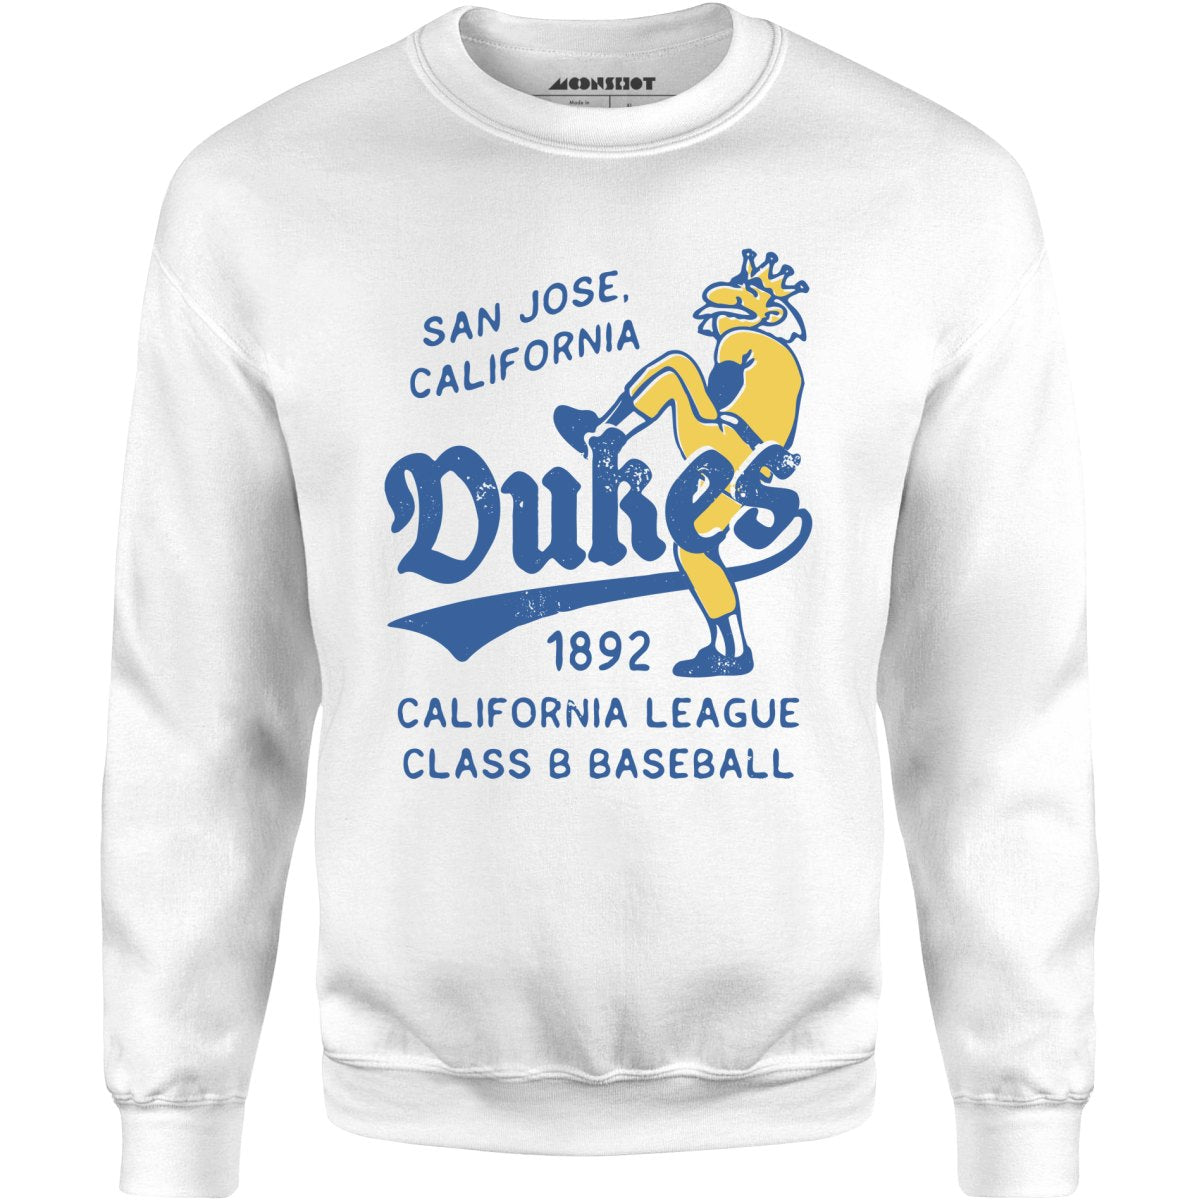 San Jose Dukes - California - Vintage Defunct Baseball Teams - Unisex Sweatshirt